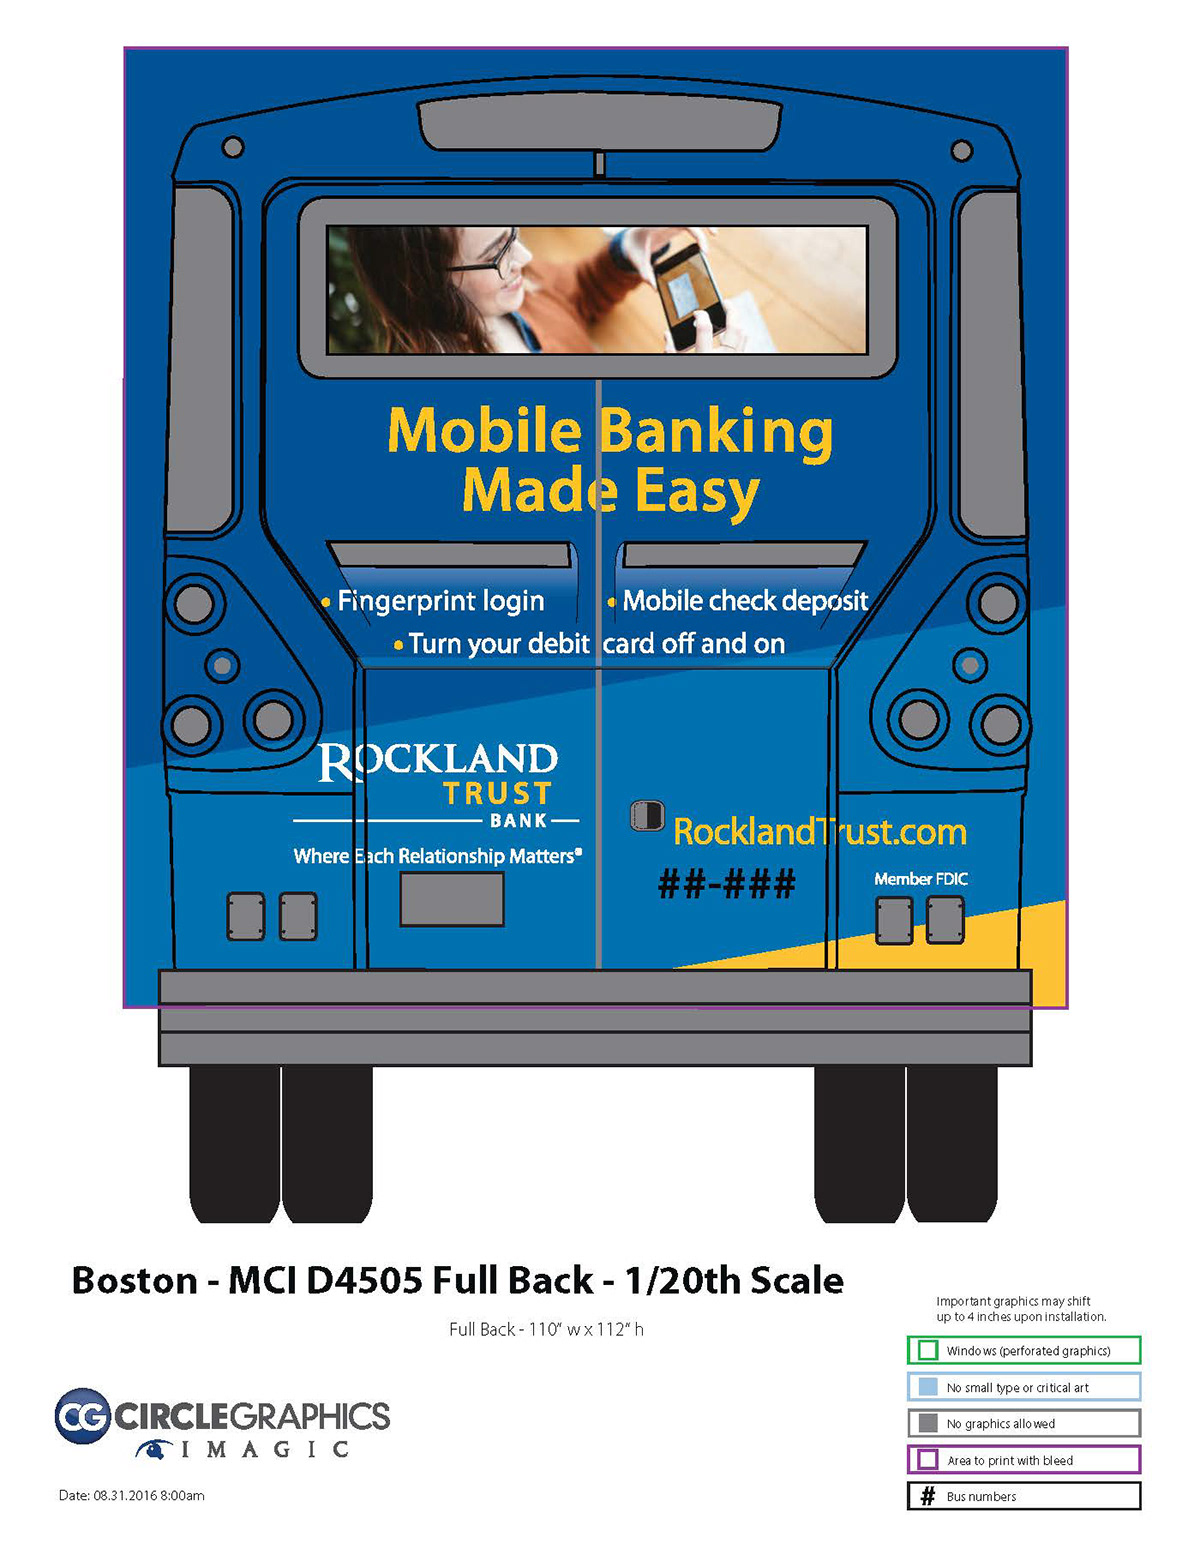 rockland rockland trust Bank banking print ads